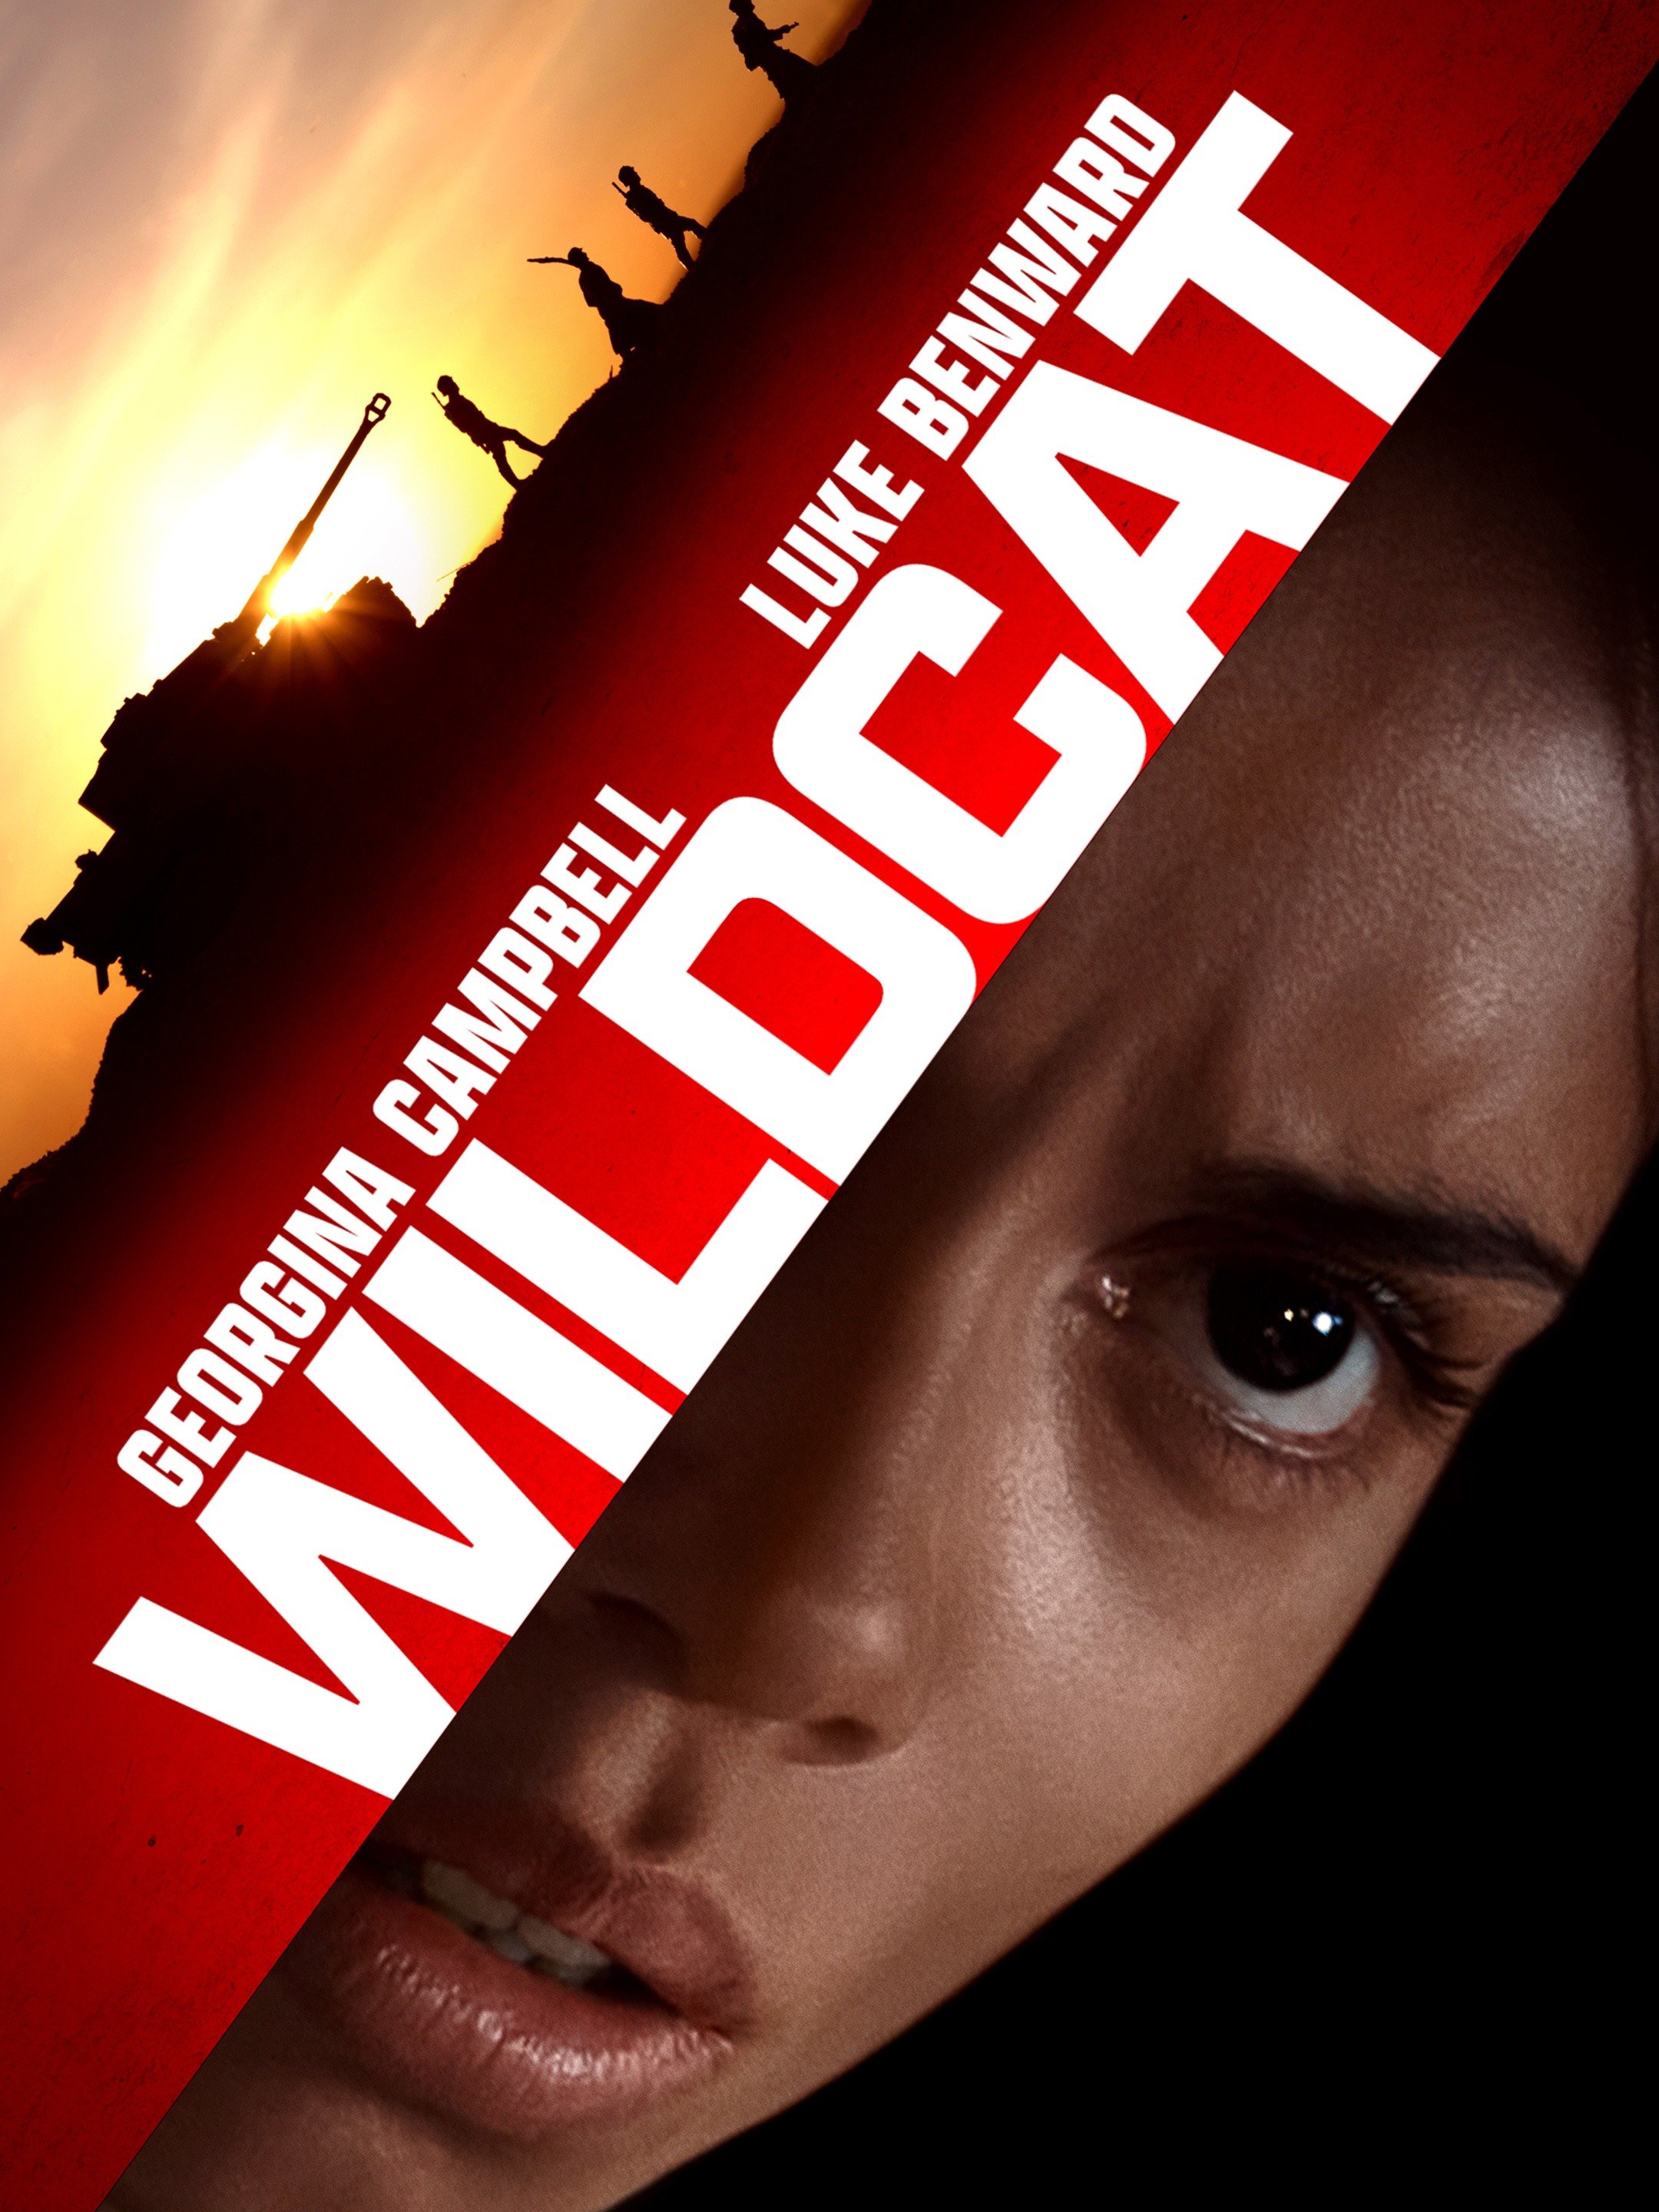 wildcat movie review 2021